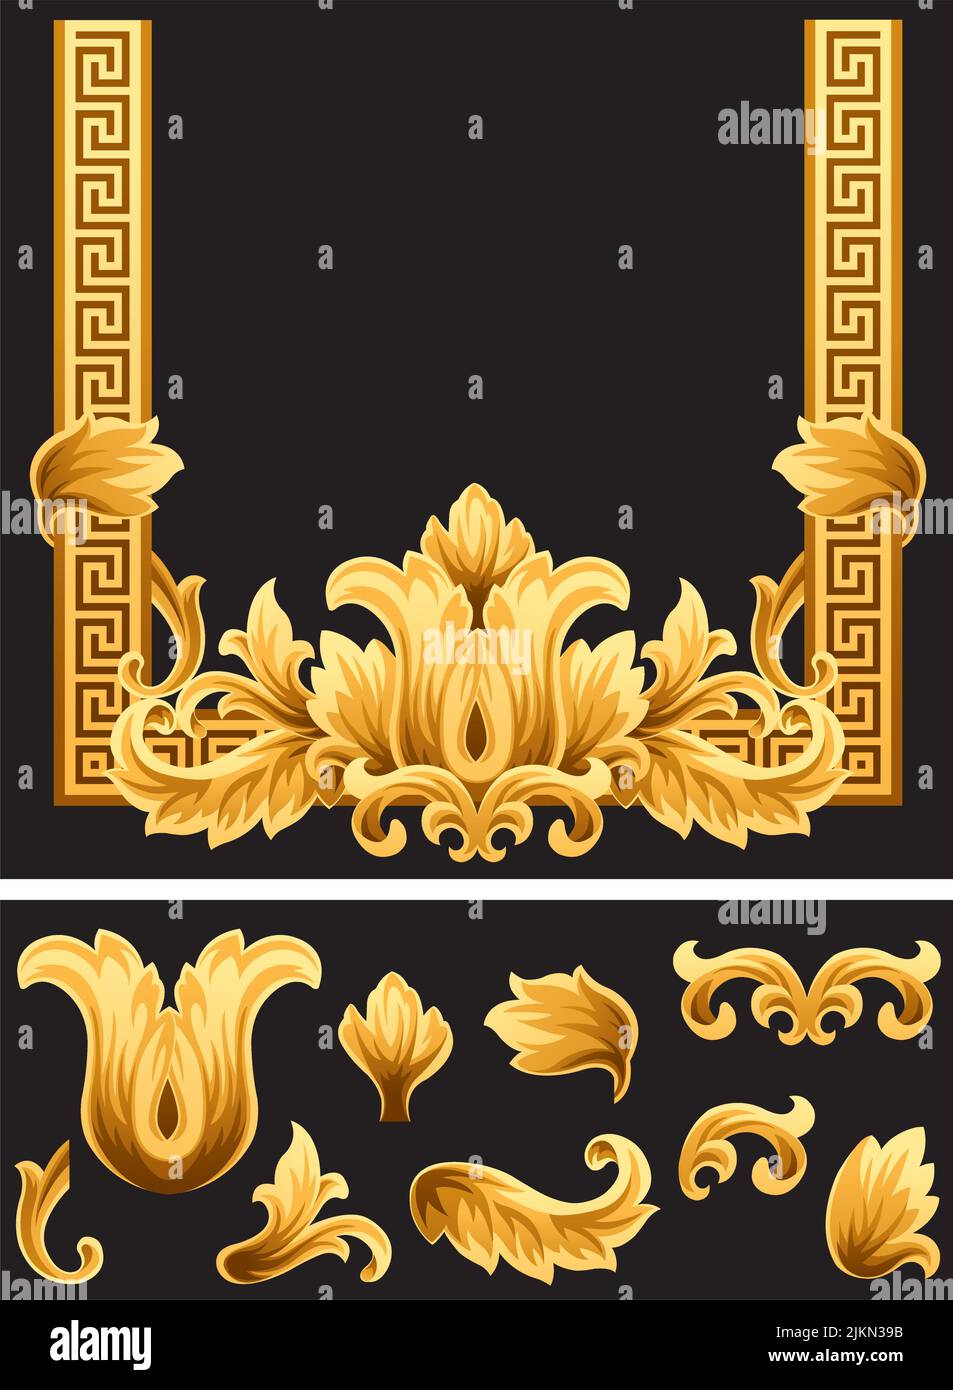 An ornate decorative vector floral golden frame and border. Stock Vector